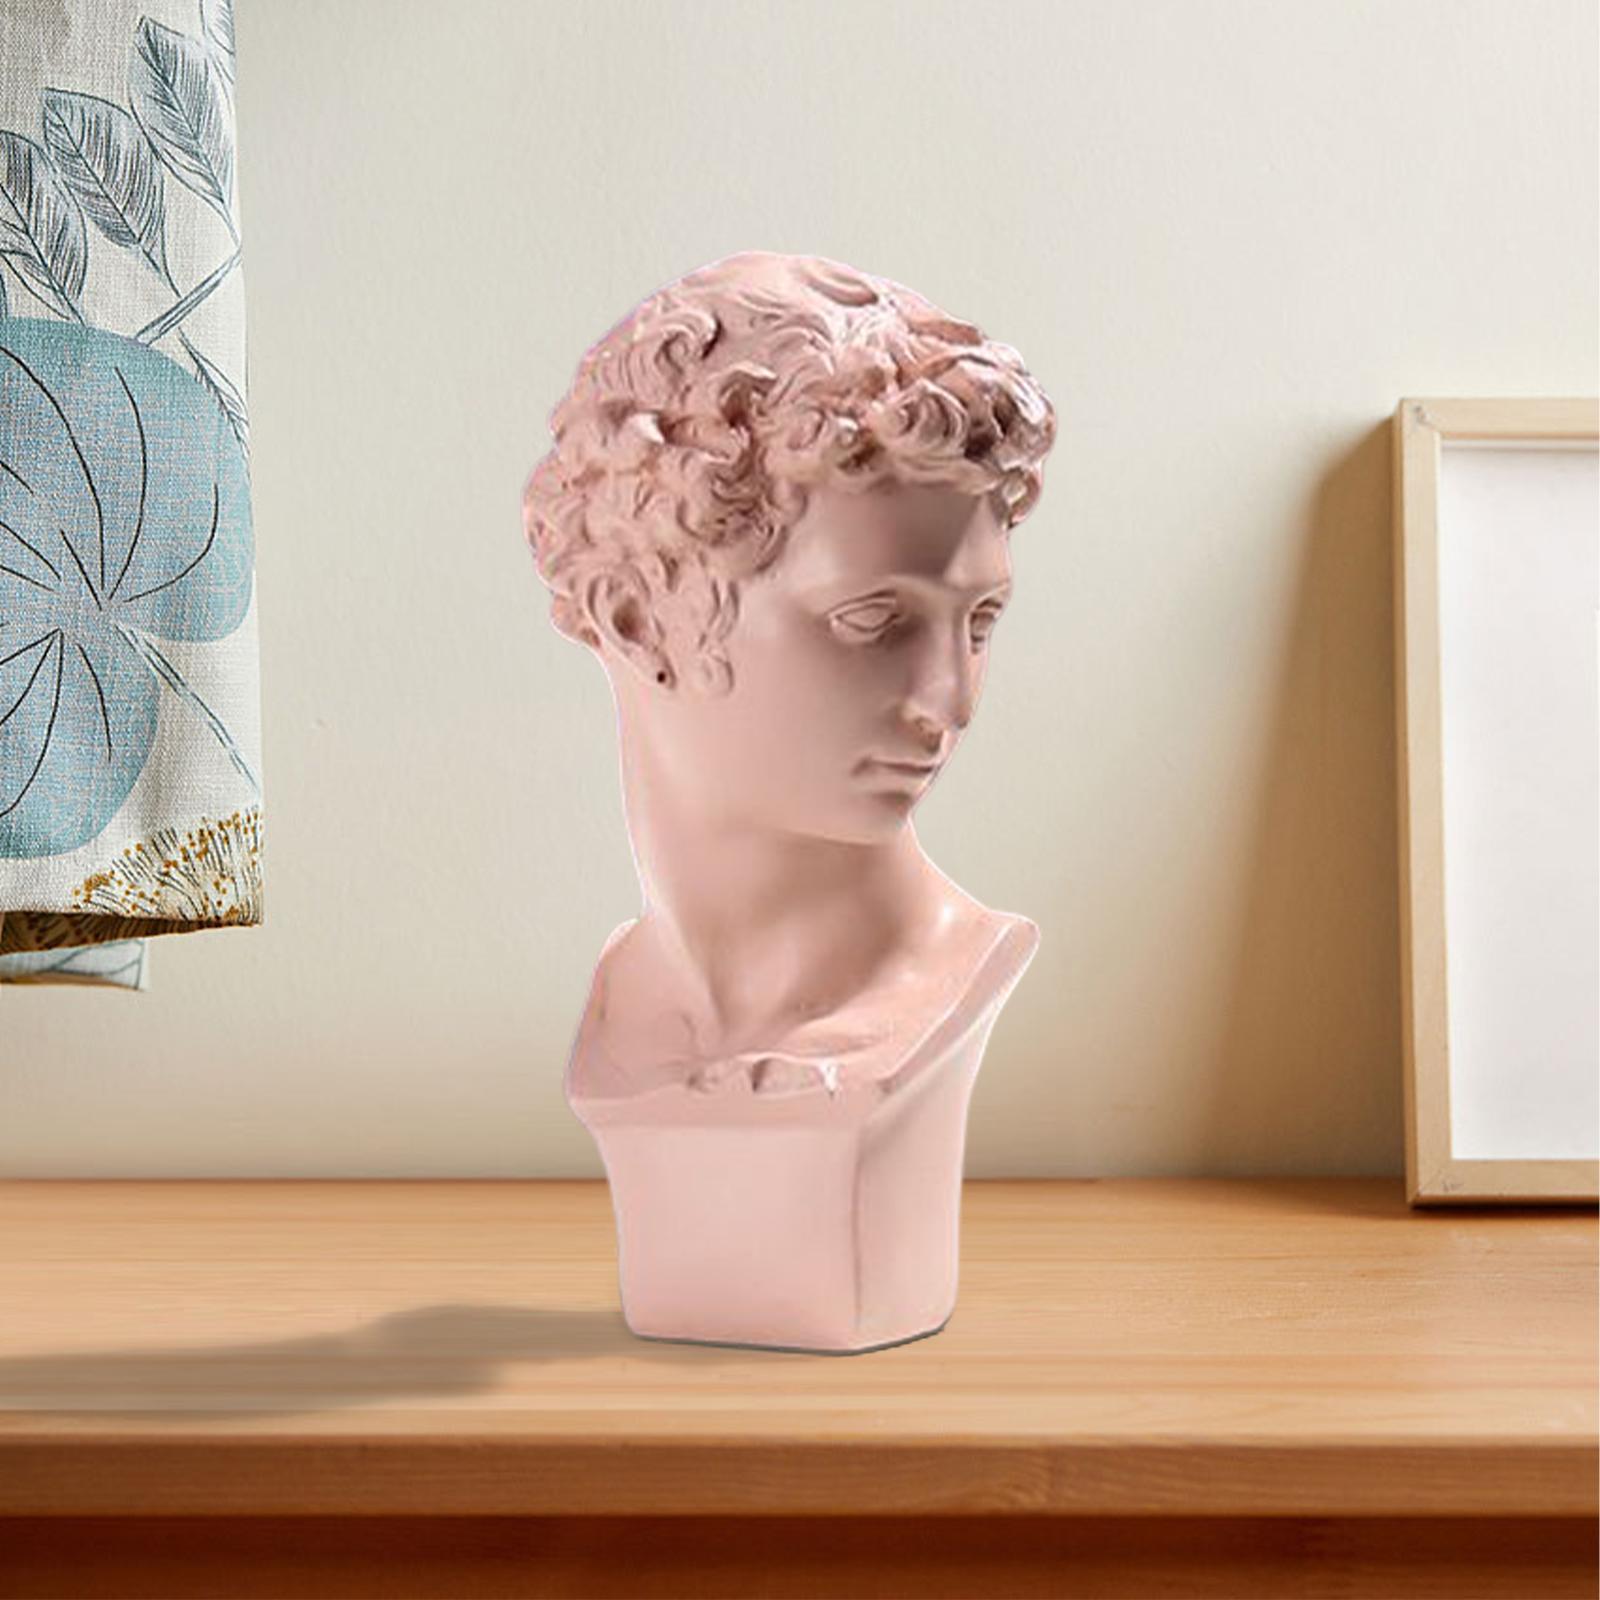 Famous David Statue Greek David Bust Sculpture for Home Decor Pink